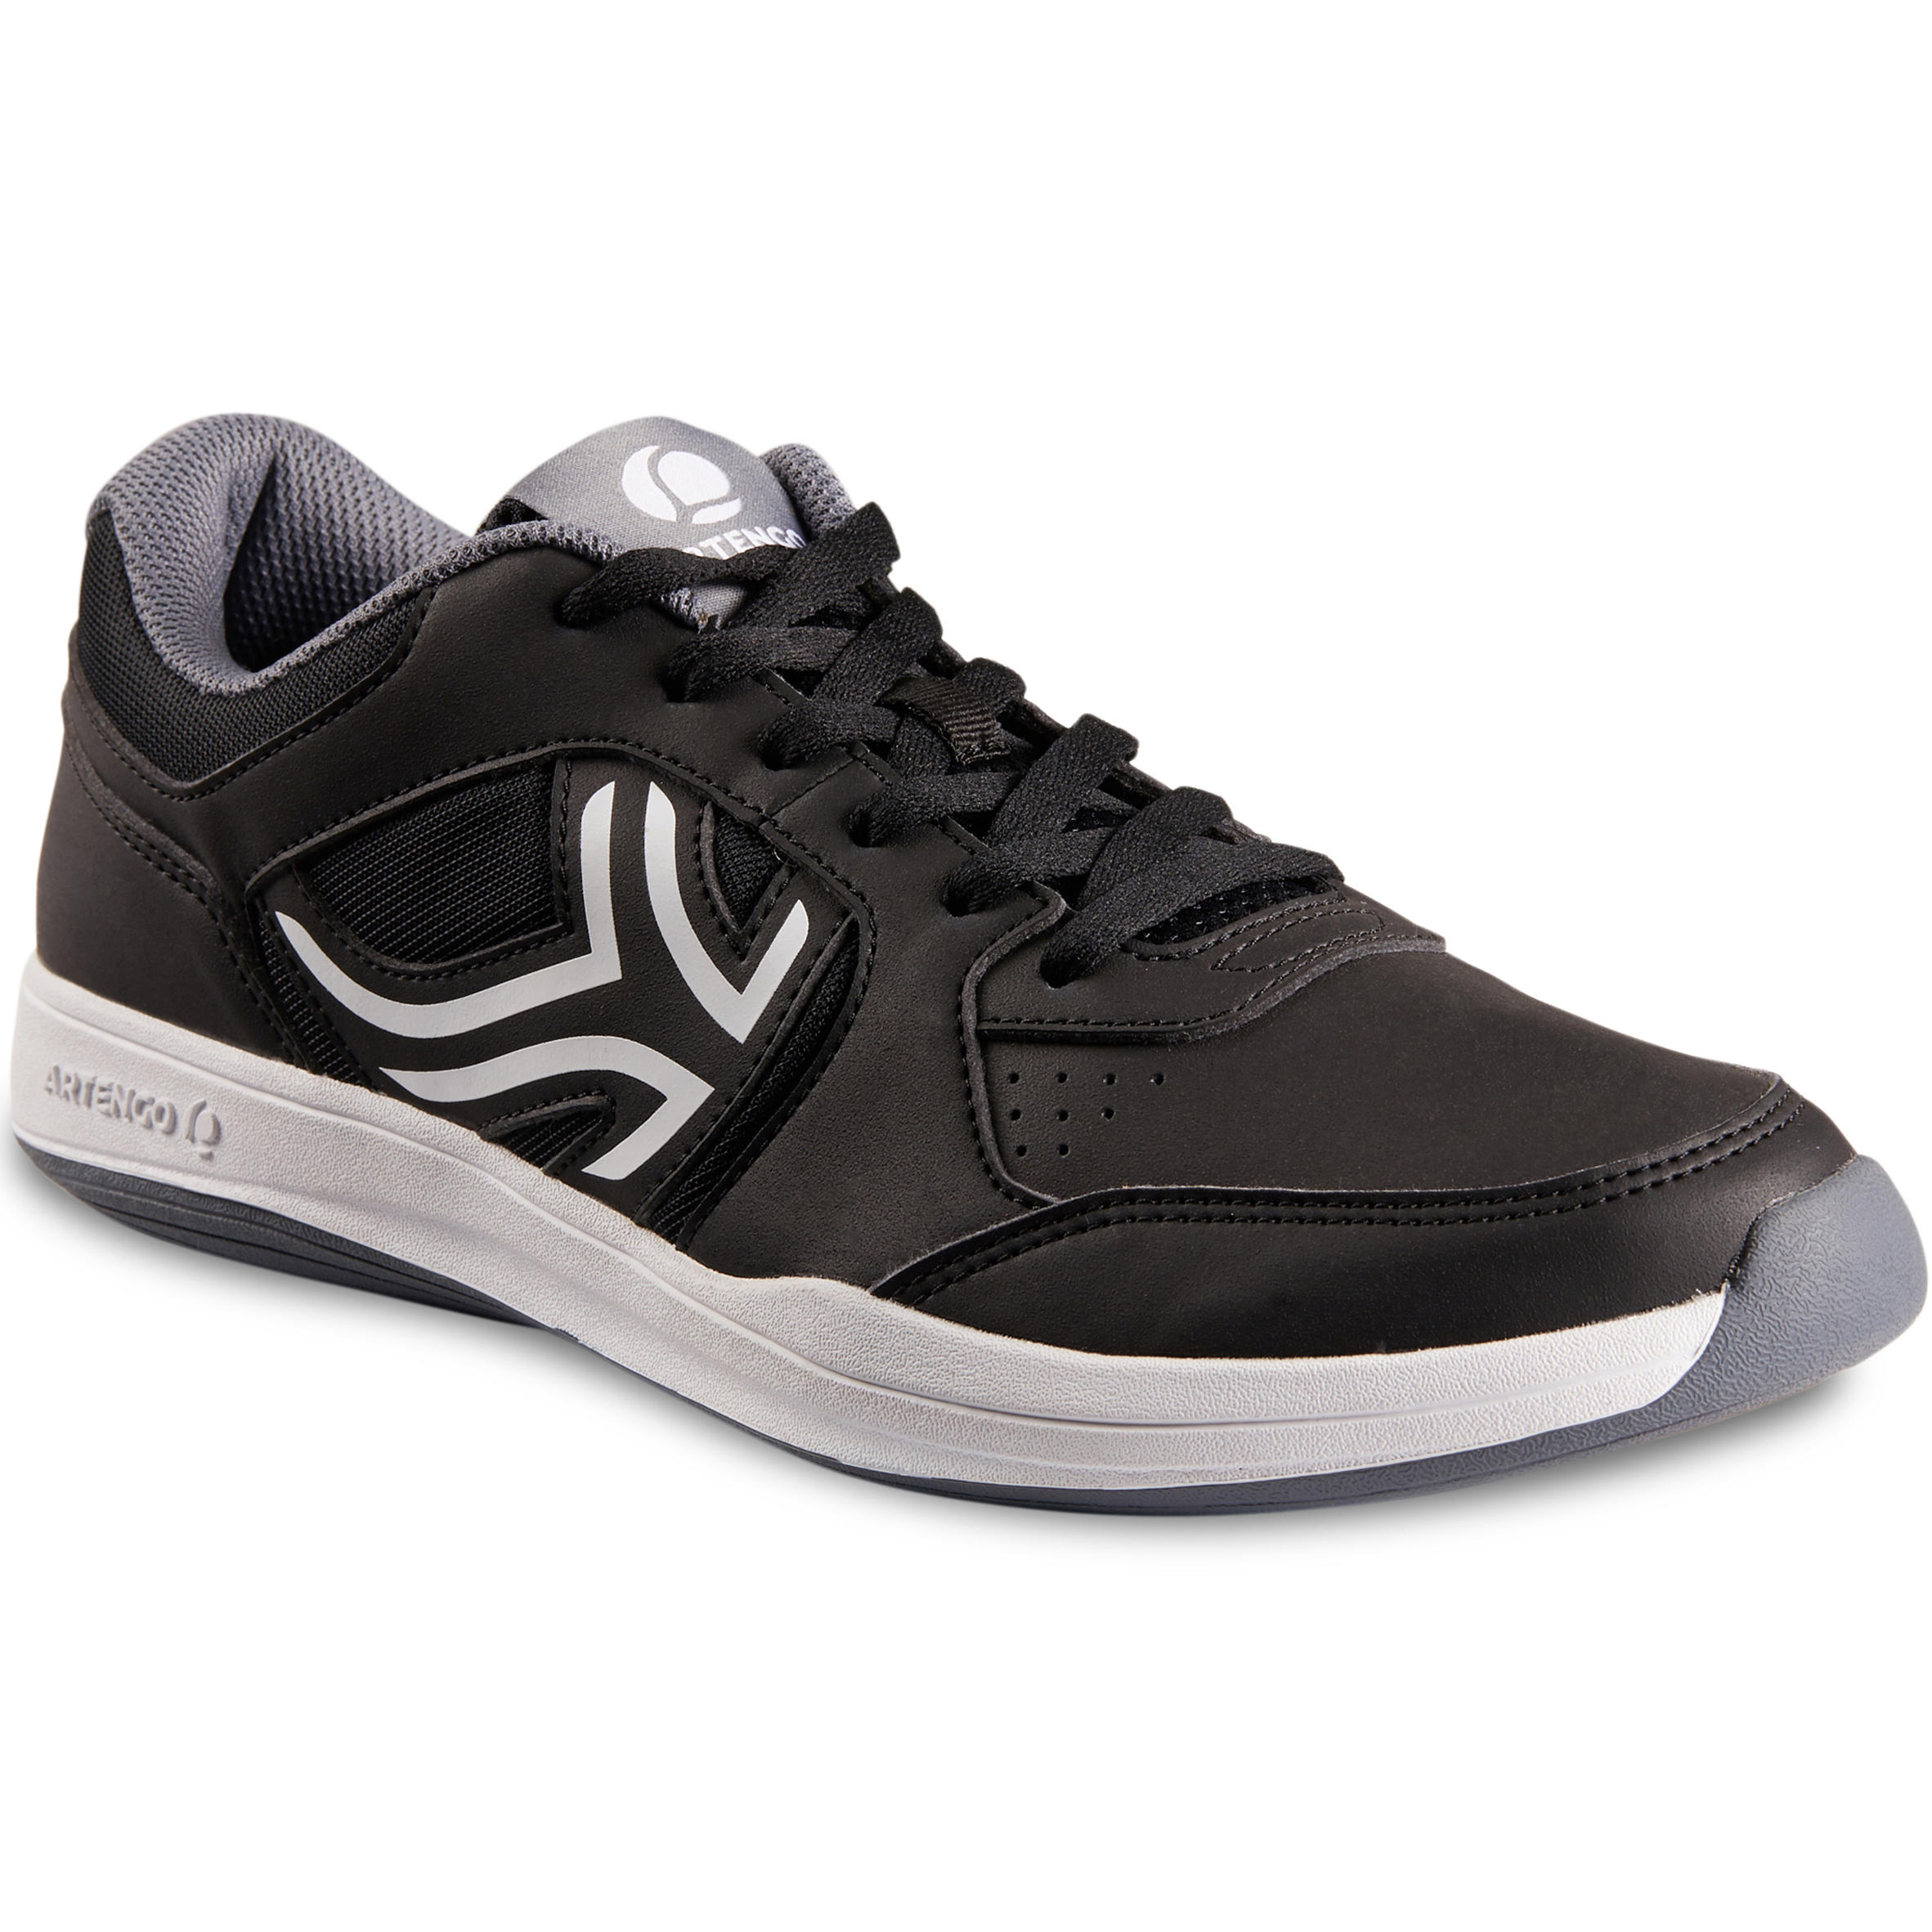 Buy Men's Tennis Shoes TS130 - Black Online | Decathlon